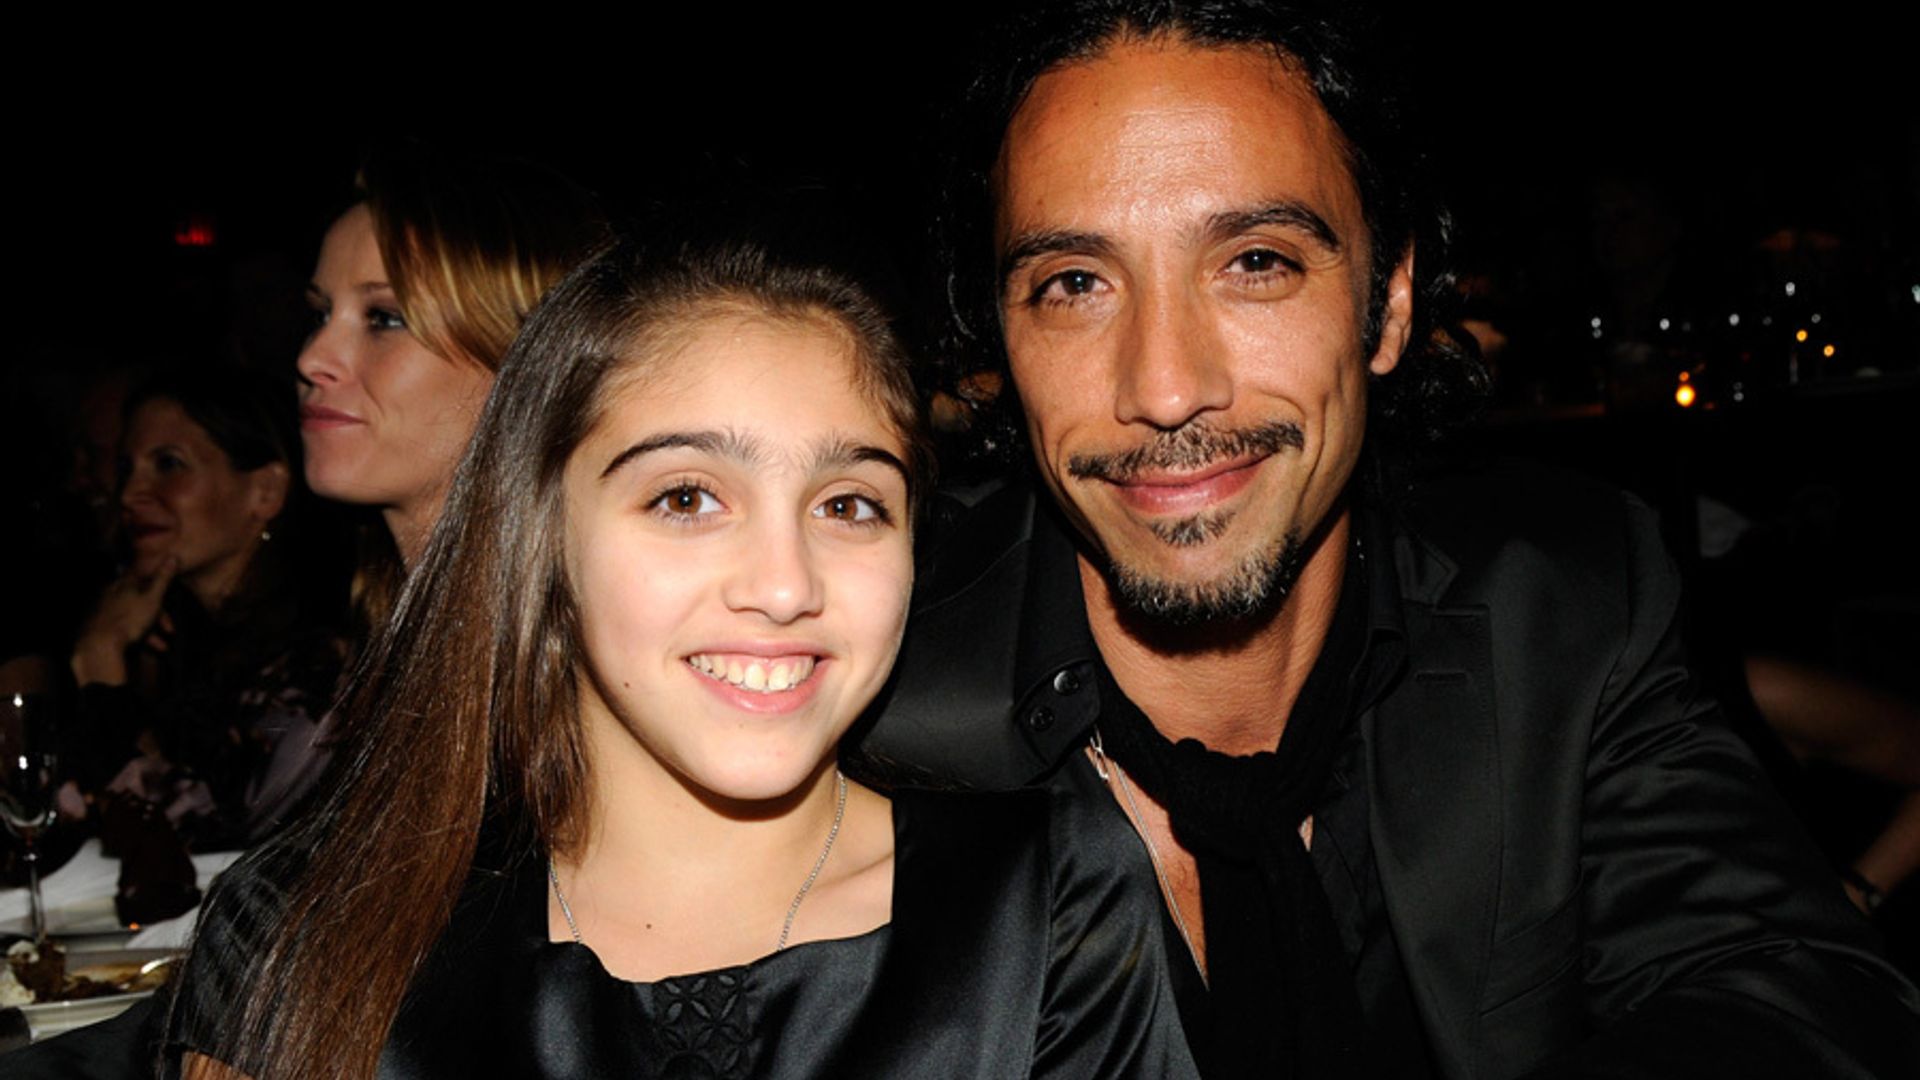 Carlos Leon talks his and Madonna's daughter Lourdes' healthy ways and fashion sense